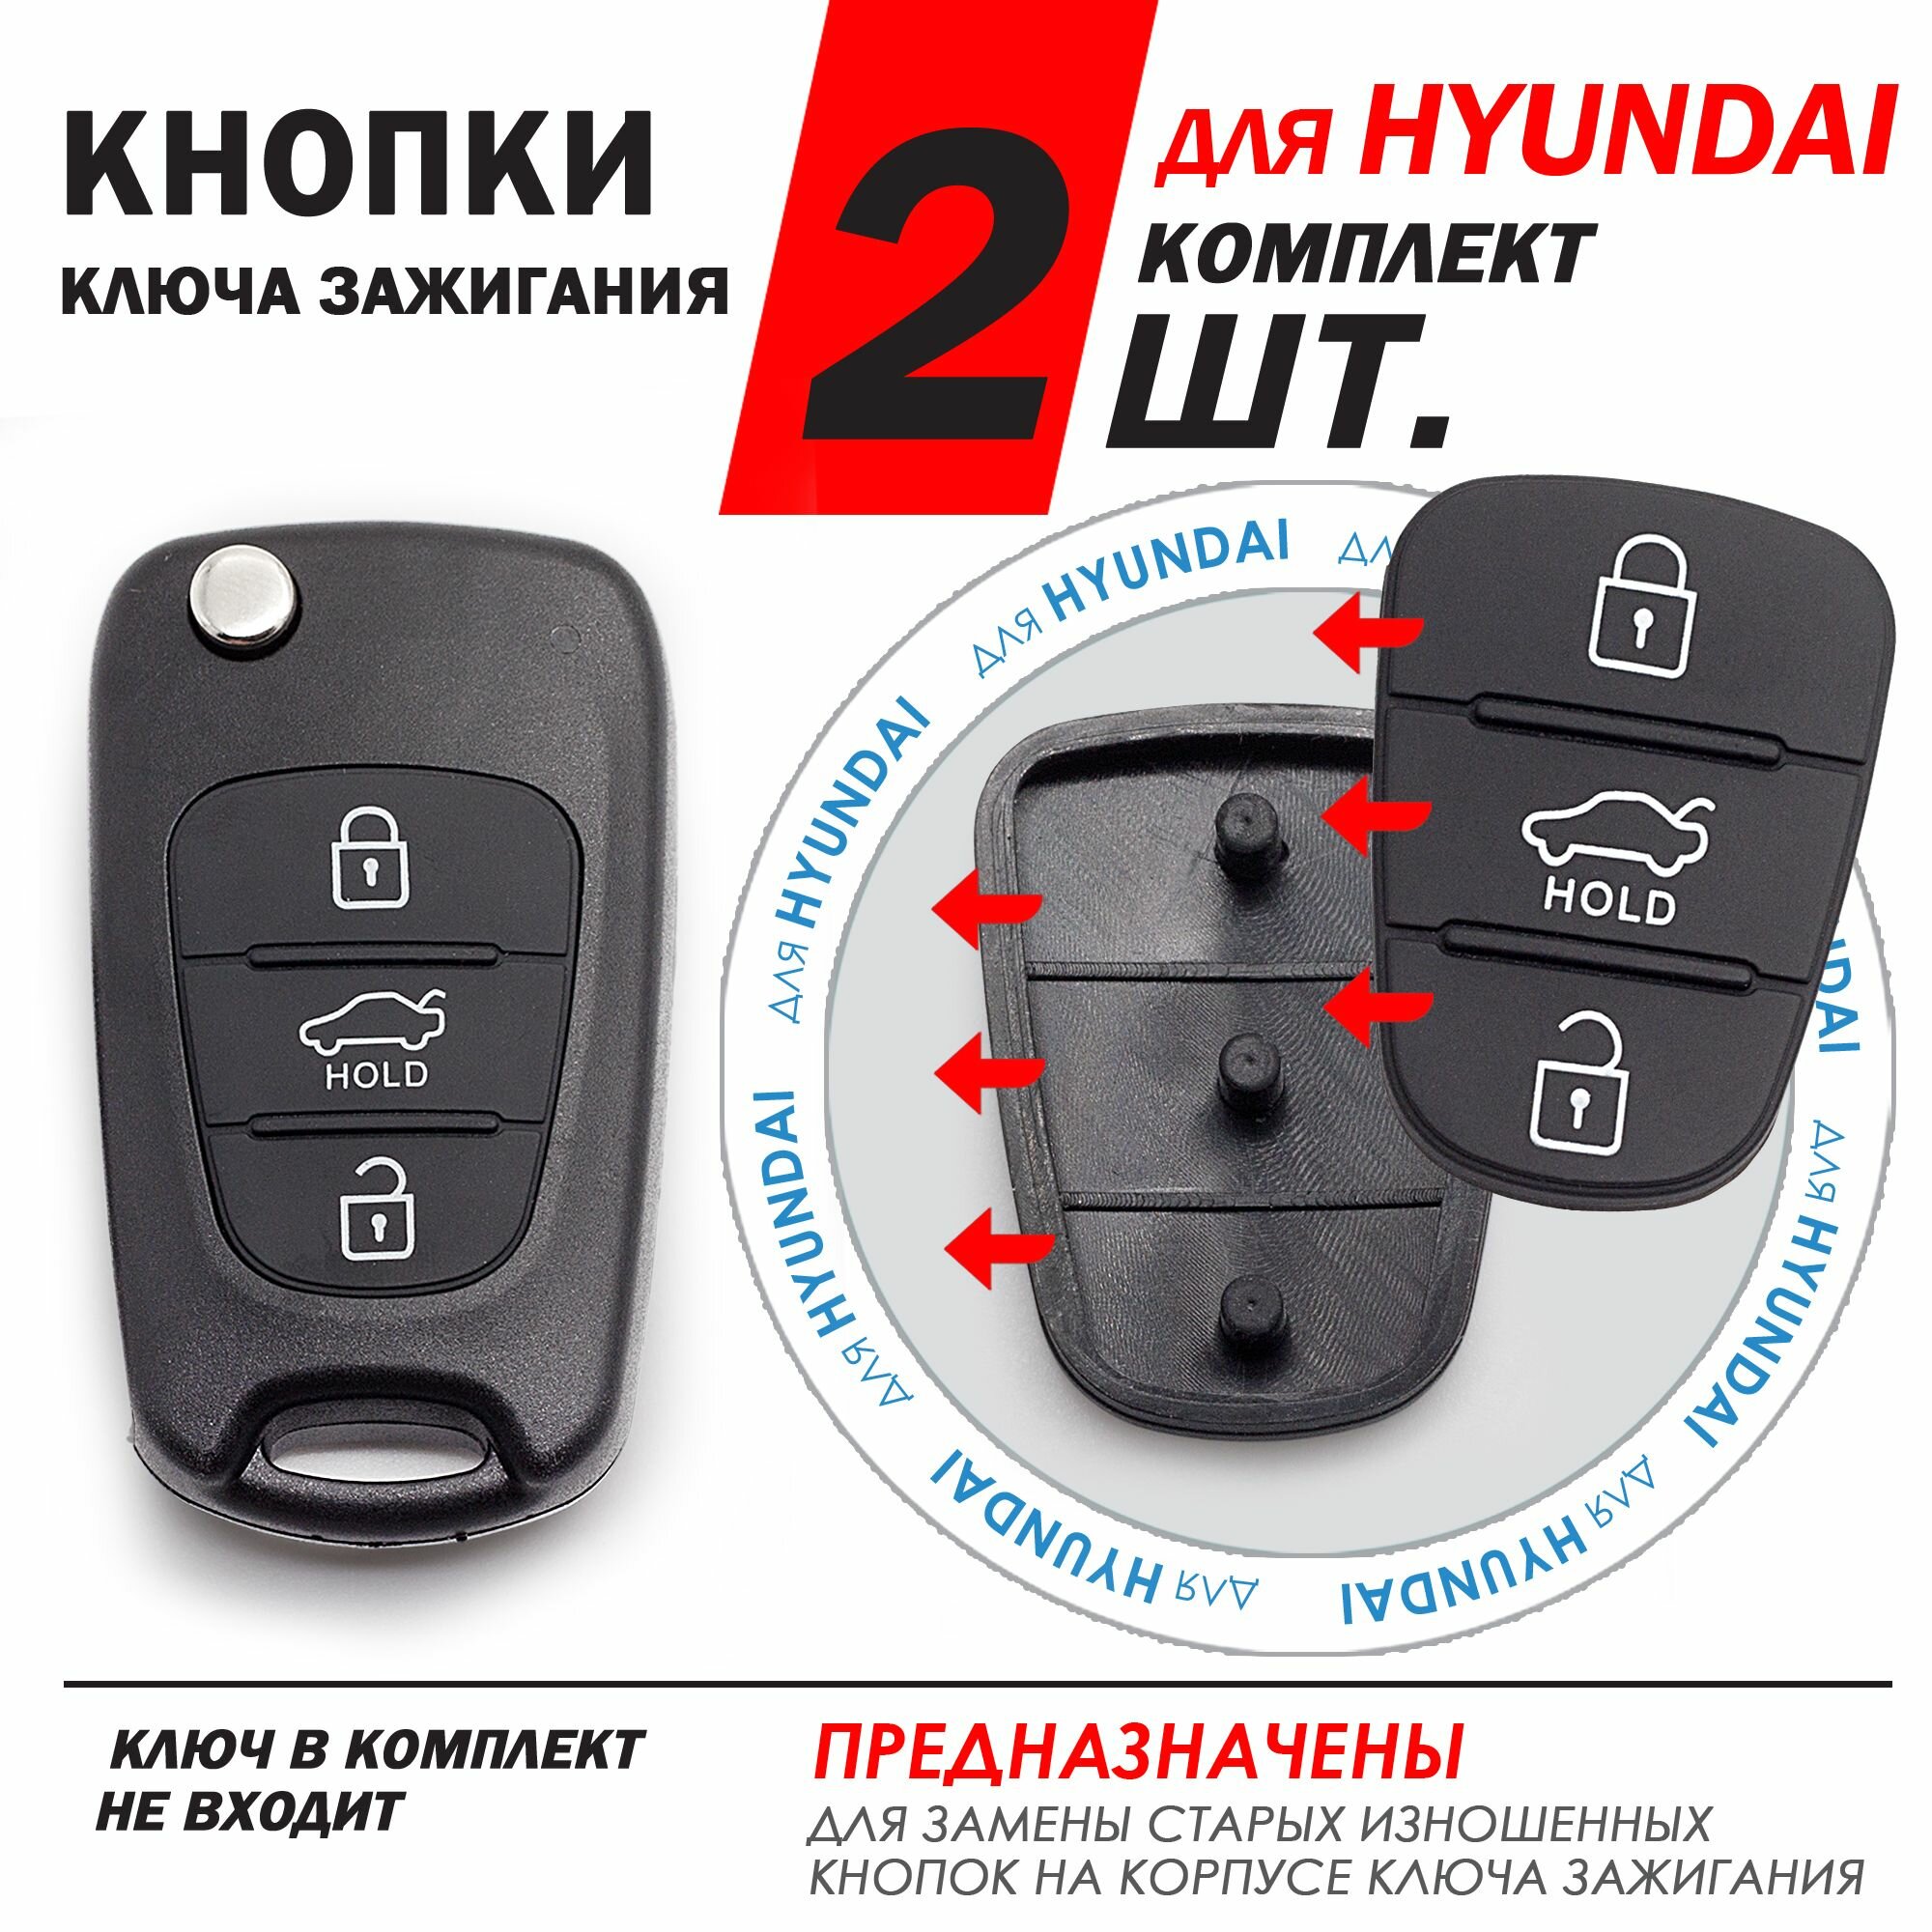 Кнопки корпуса ключа зажигания для Hyundai / Хендай - комплект 2 штуки (для 3-х кнопочного ключа, c HOLD)